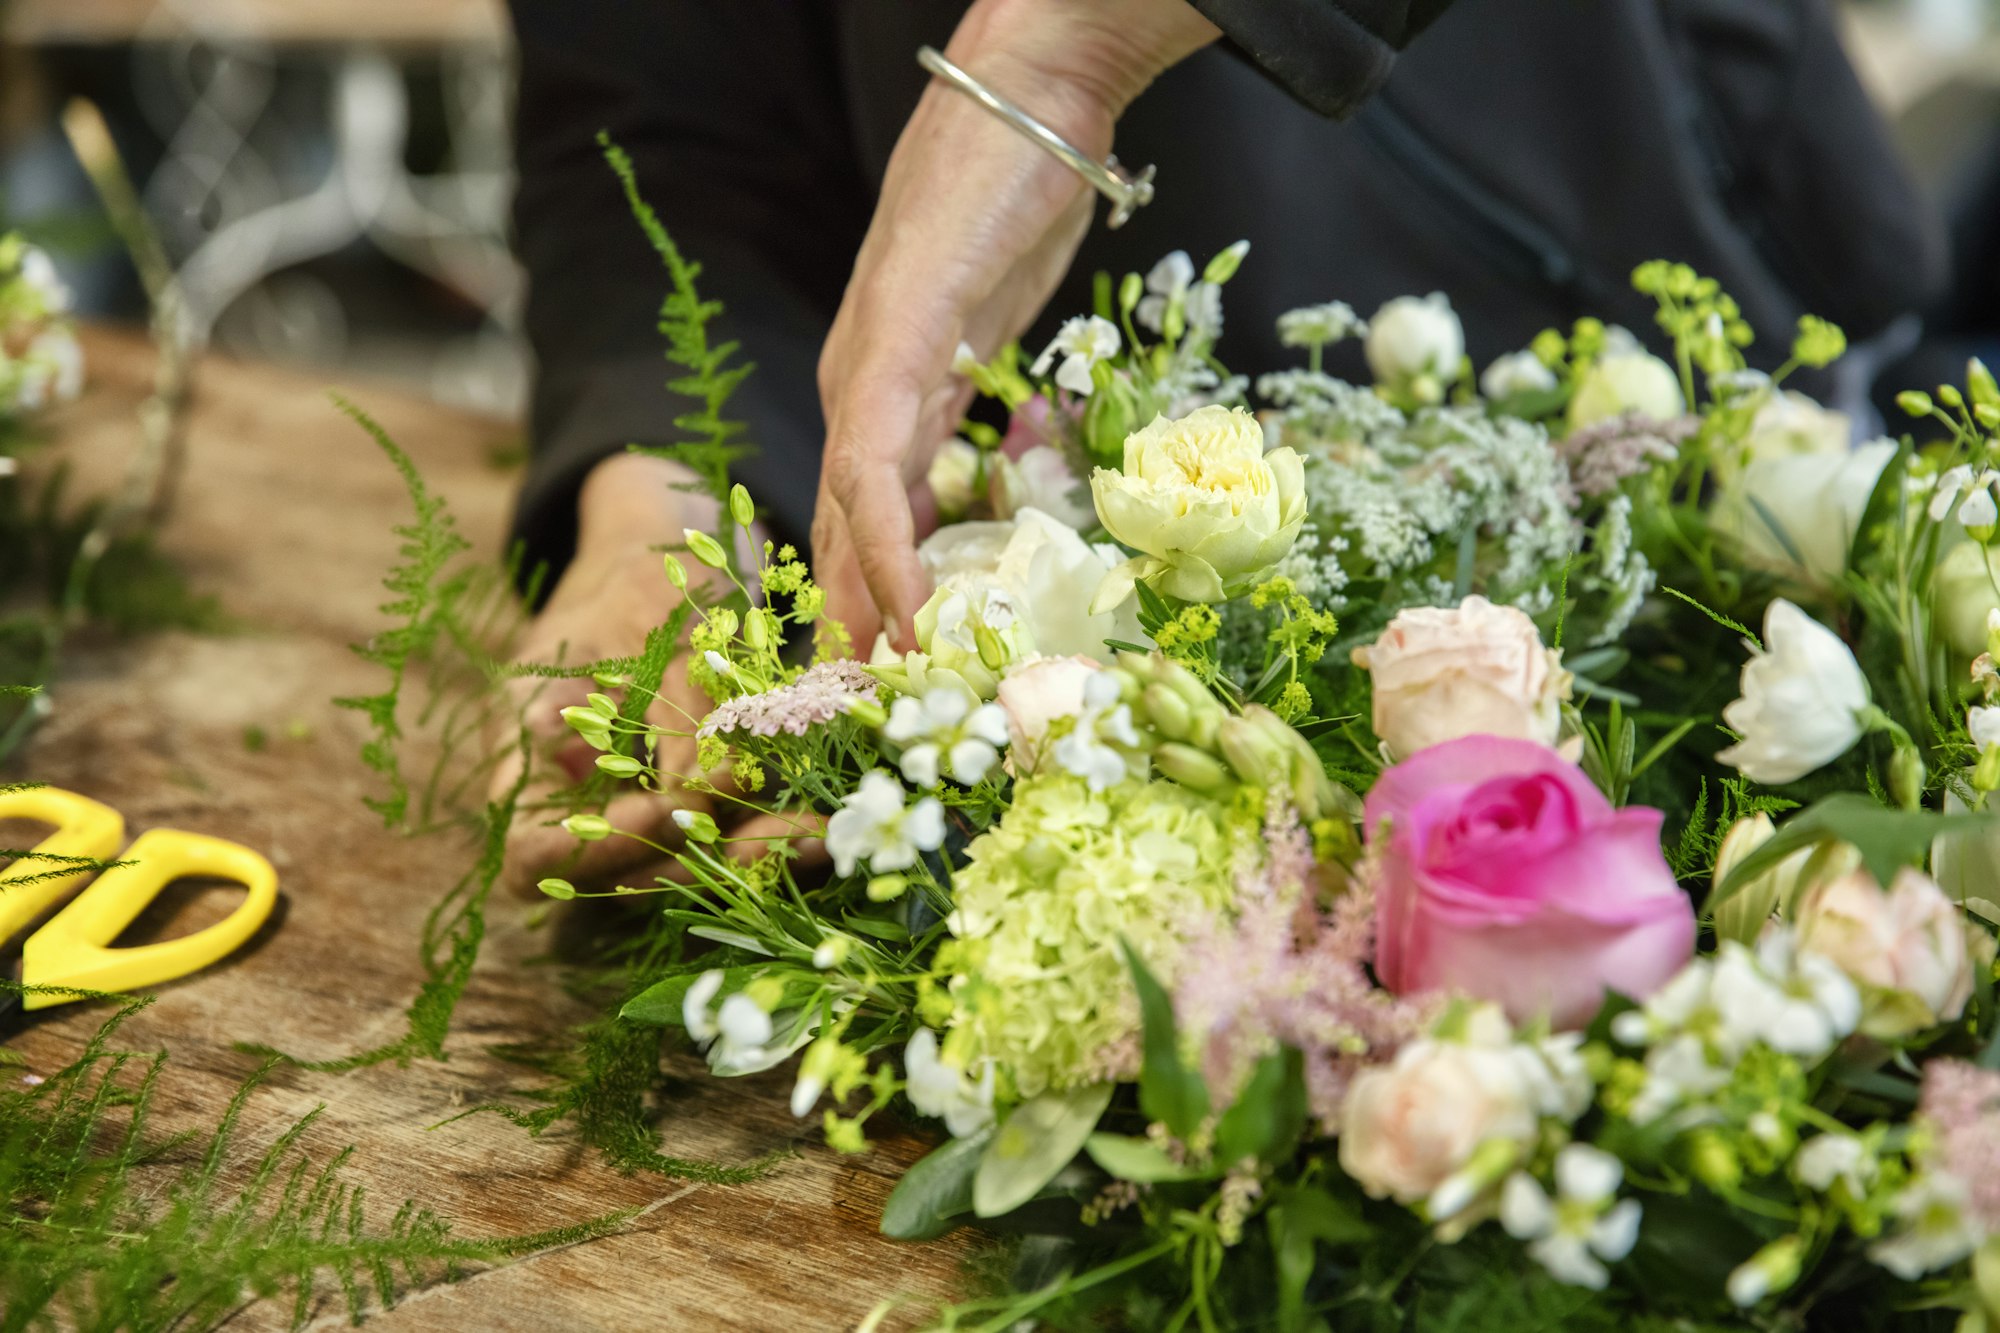 A woman working on a flower arrangement, a trained florist.